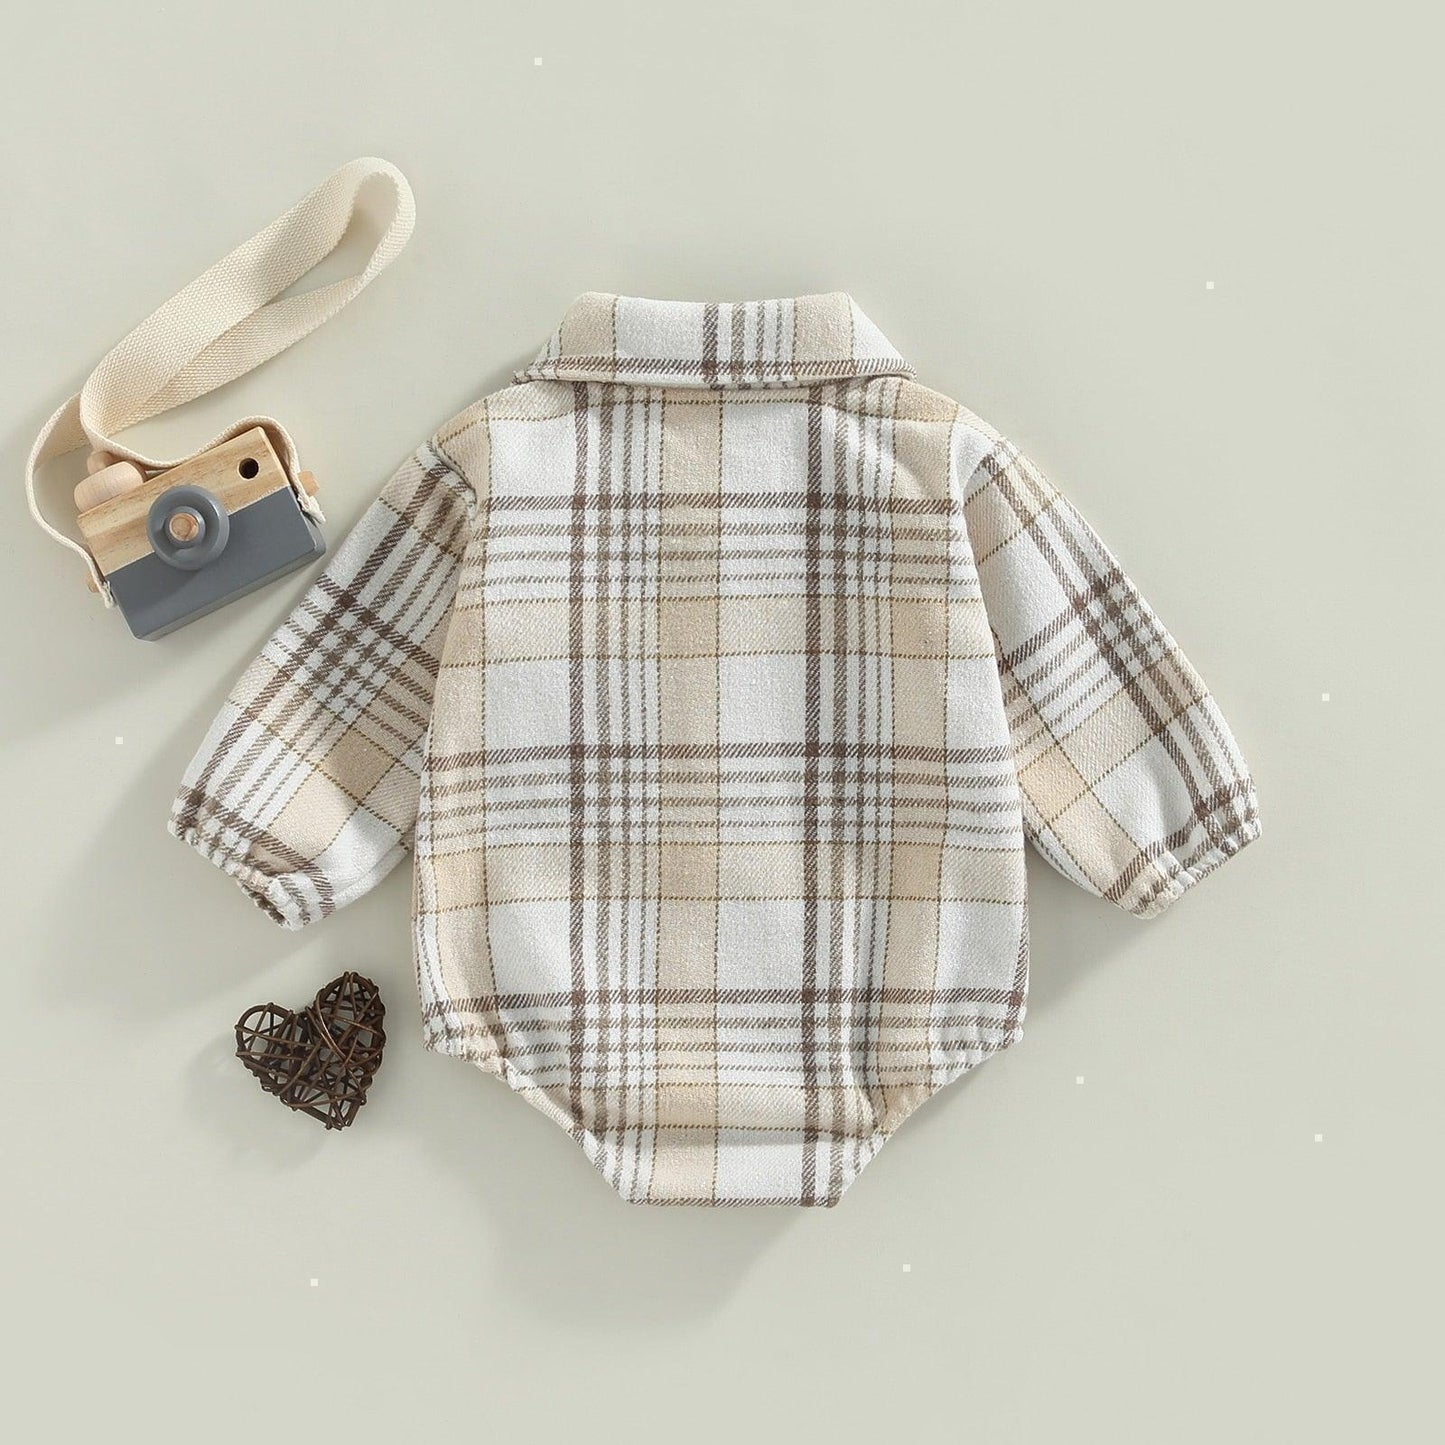 Toddler Oversized Plaid Flannel Jumpsuit Romper - Shop Baby Boutiques 